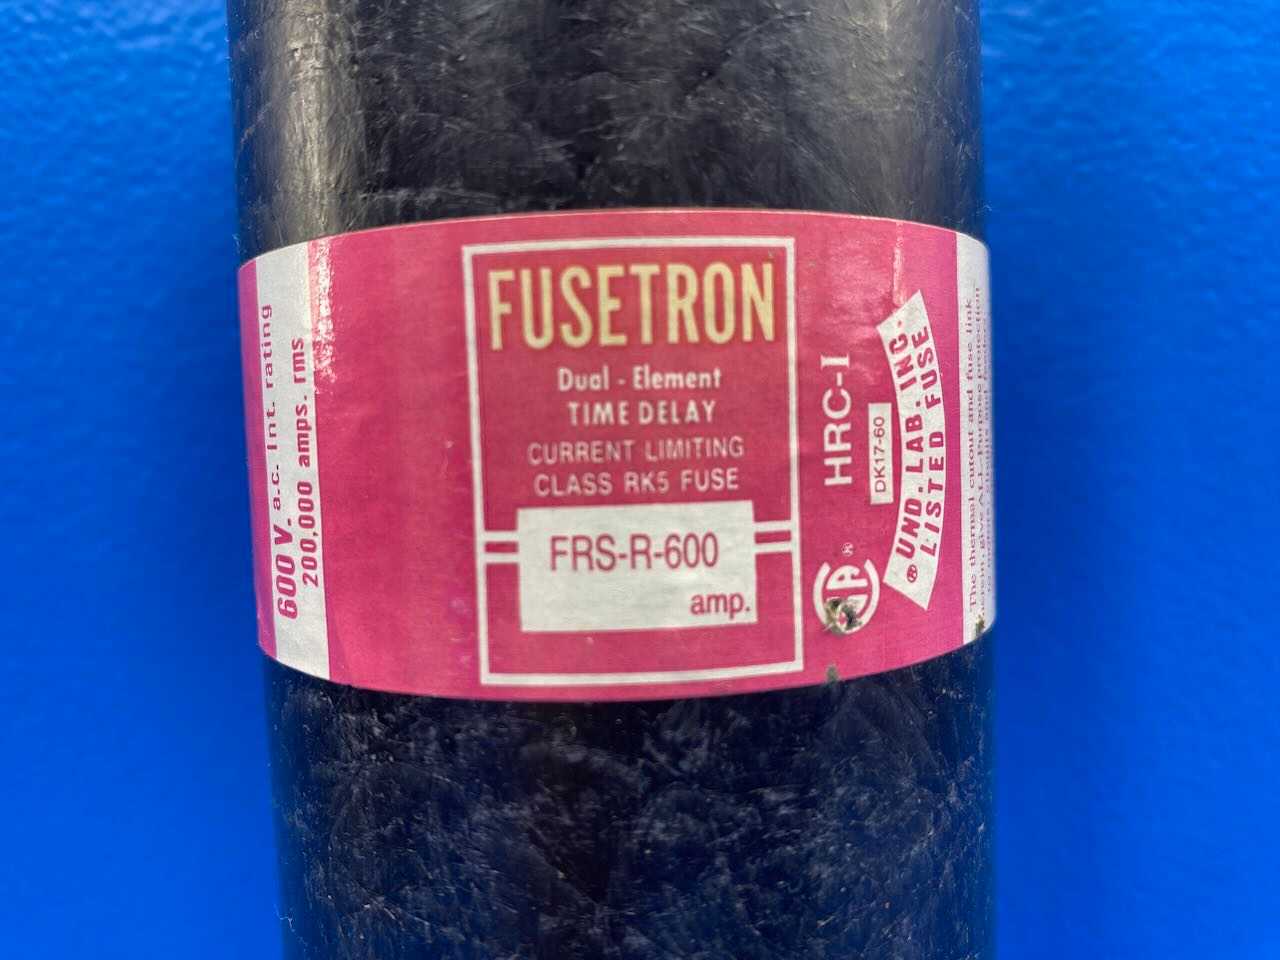 600 Fusetron Dual element FRS-R-600 (HRC-I)